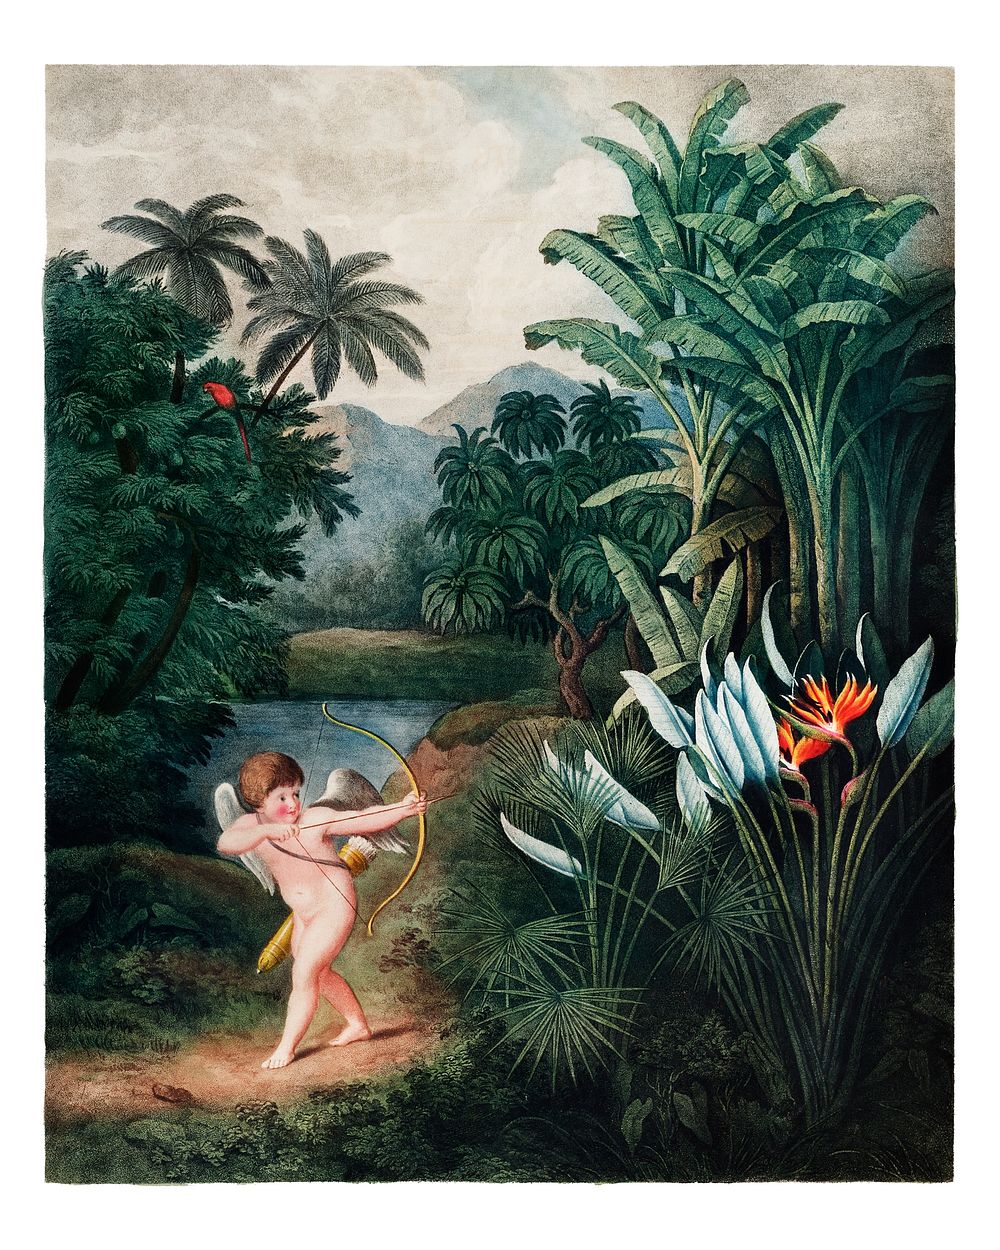 Cupid Inspiring Plants with Love vintage illustration by Robert John Thornton. Digitally enhanced by rawpixel.